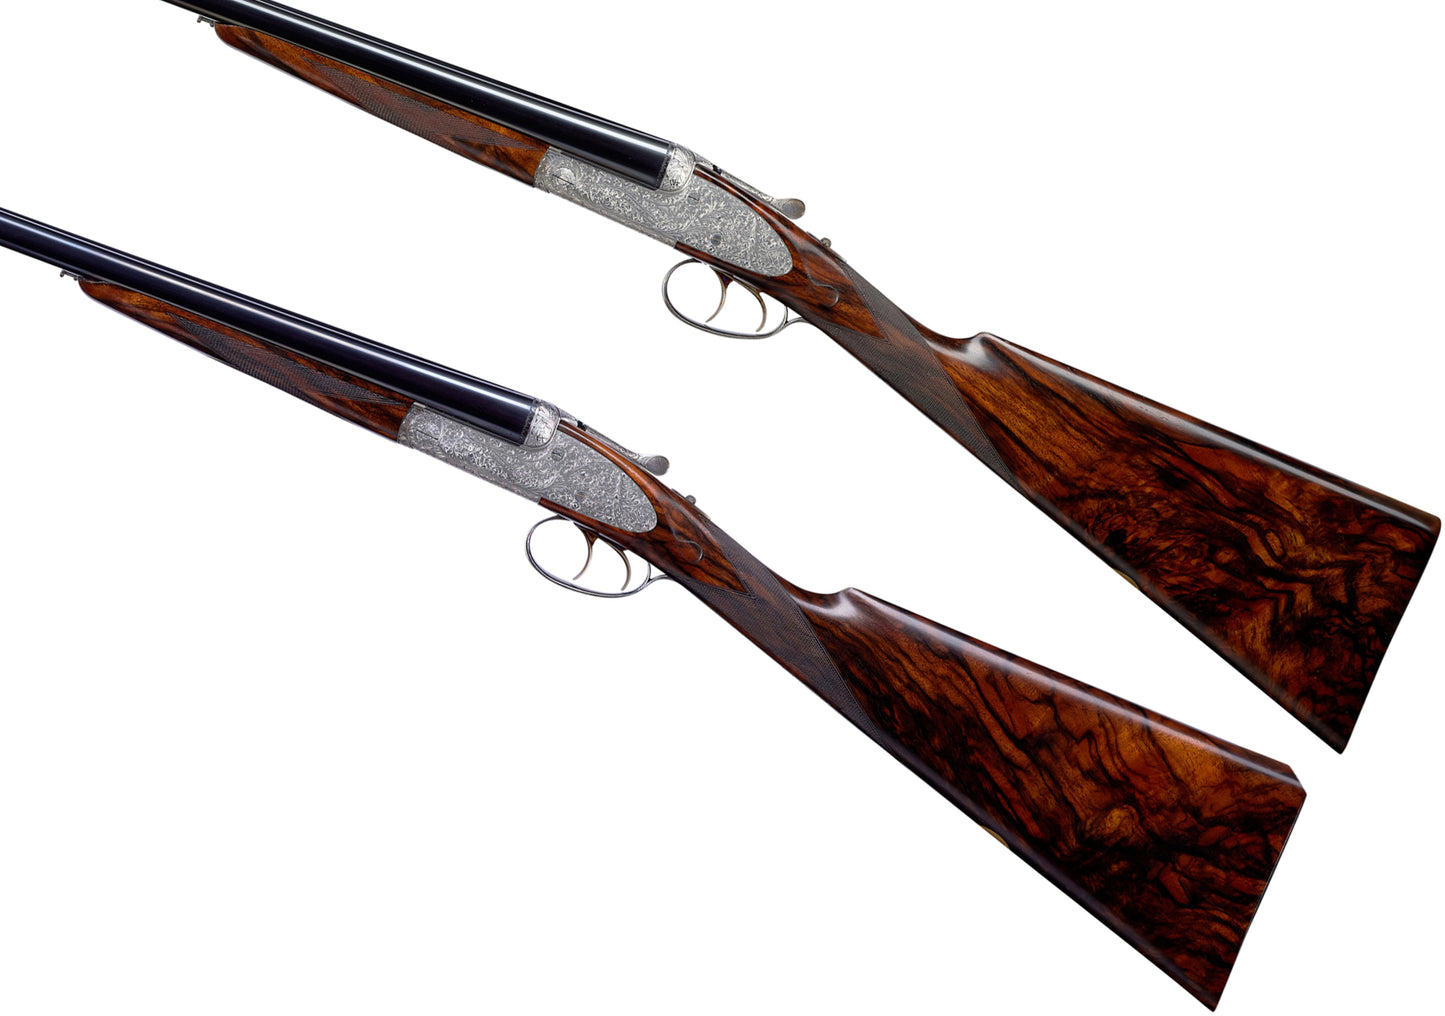 Pair of Purdey Sidelock Shotguns 30295-6